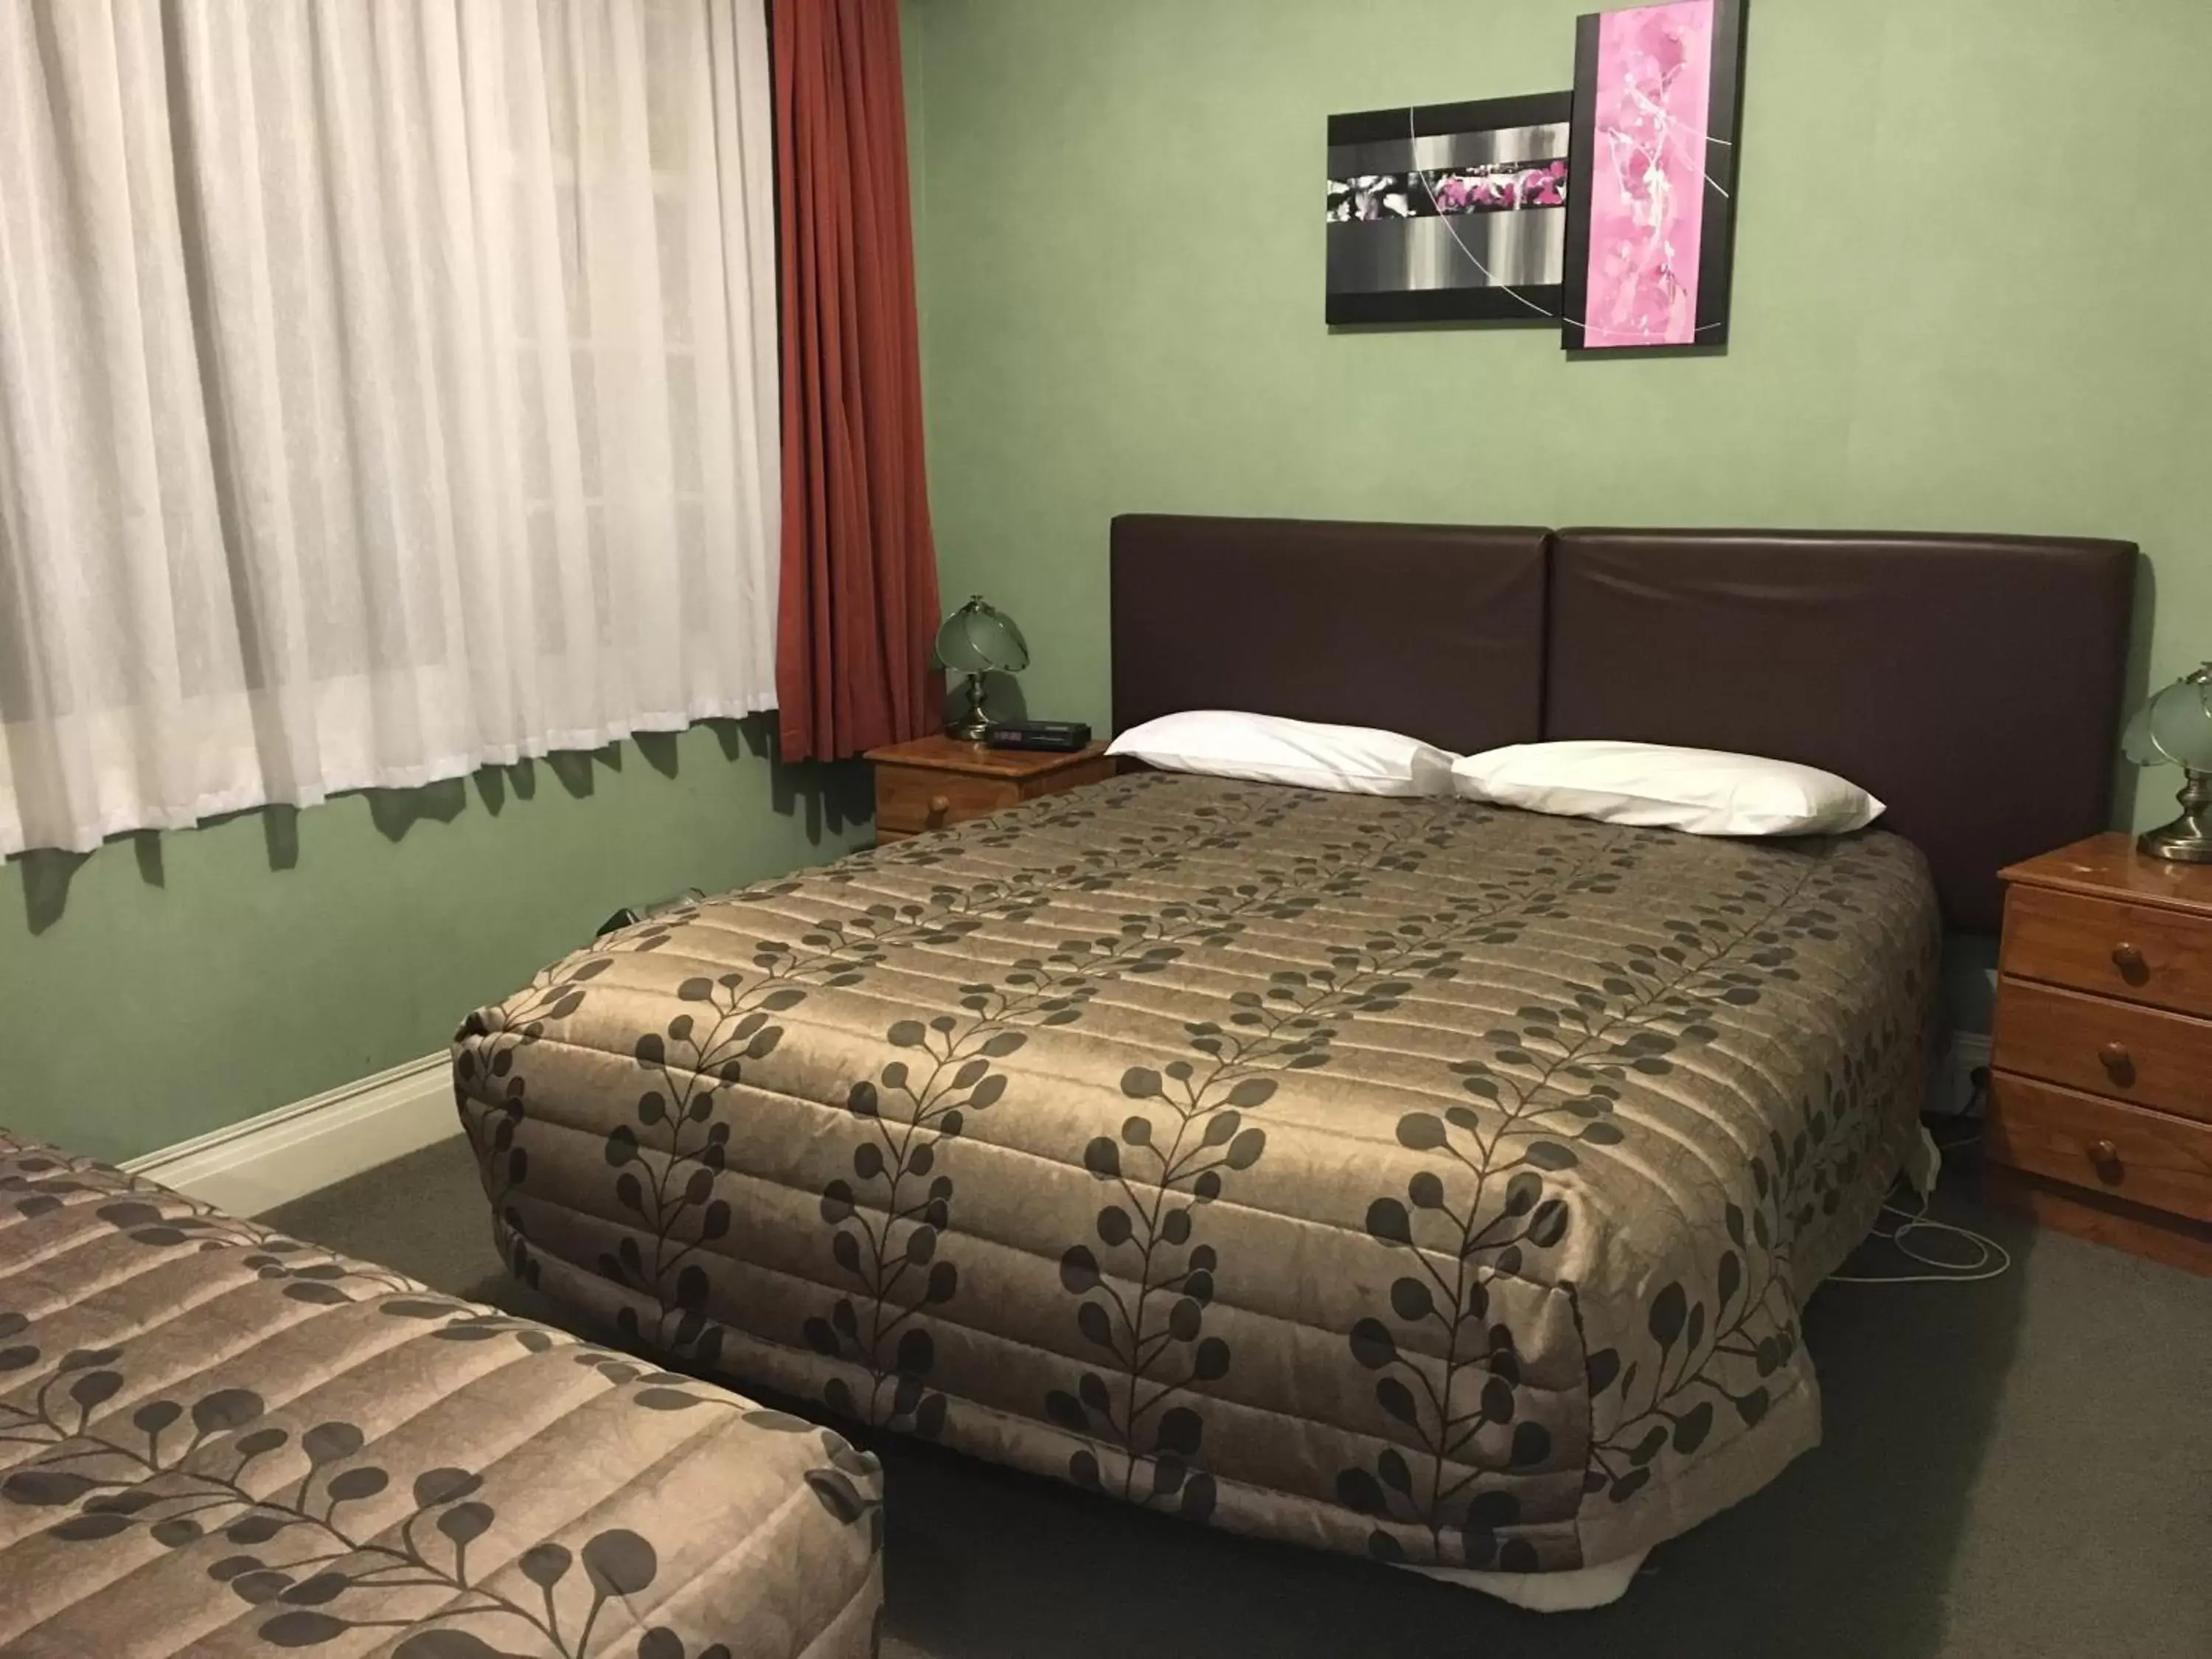 Bedroom, Room Photo in Colonial Motel